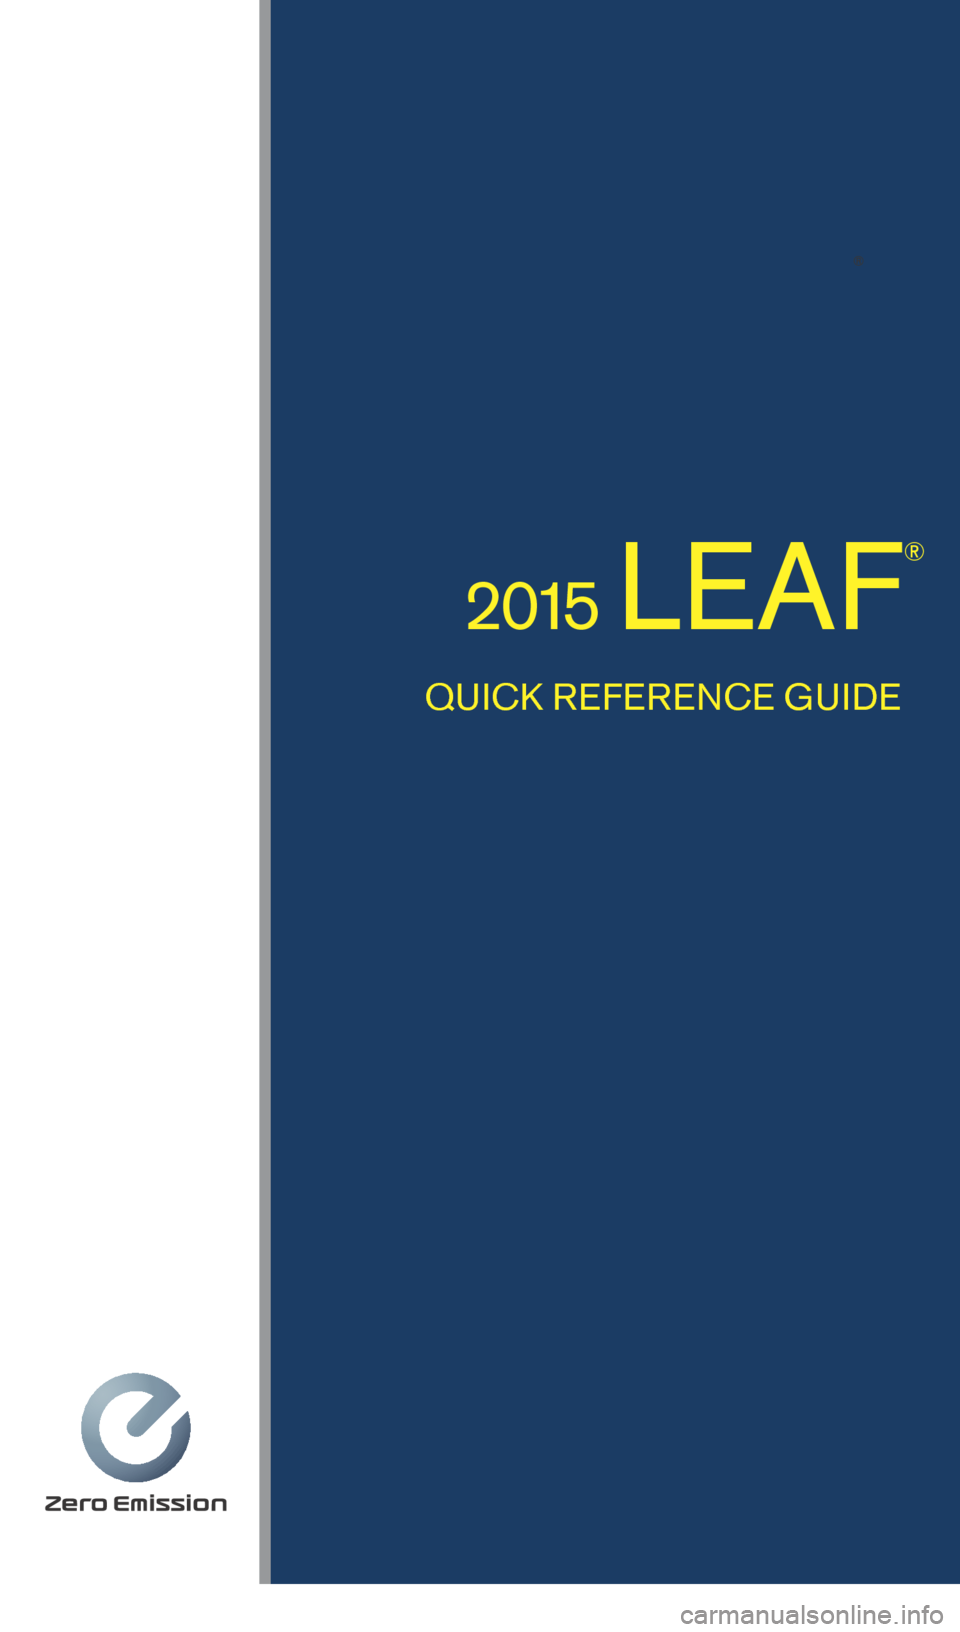 NISSAN LEAF 2015 1.G Quick Reference Guide QUICK REFERENCE GUIDE
   2015 LEAF
®
1789594_15b_Leaf_QRG_063014.indd   26/30/14   1:28 PM 